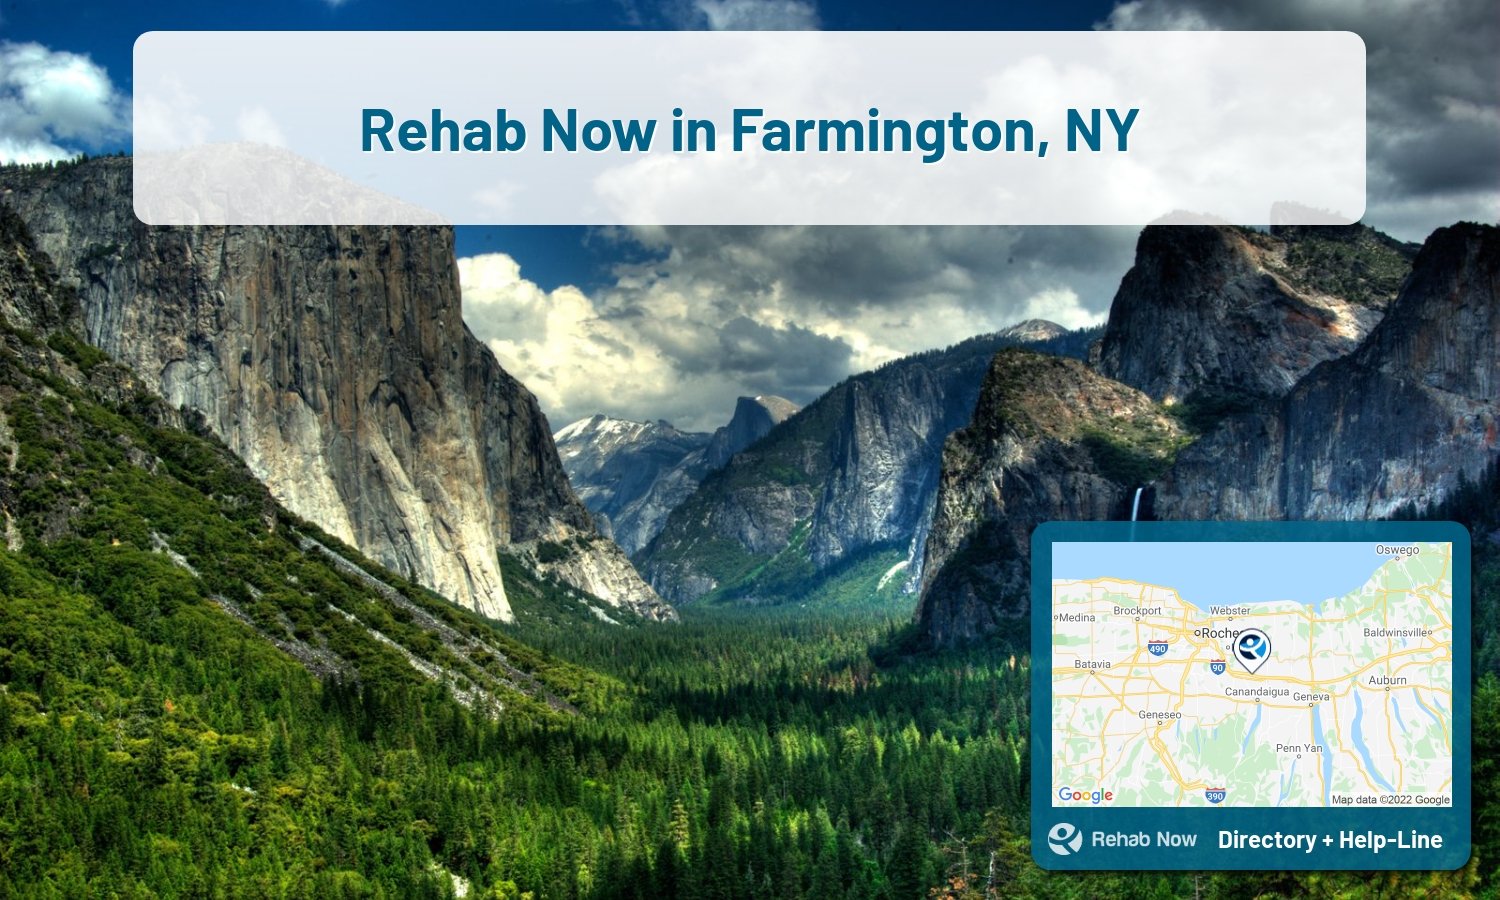 Drug rehab and alcohol treatment services nearby Farmington, NY. Need help choosing a treatment program? Call our free hotline!